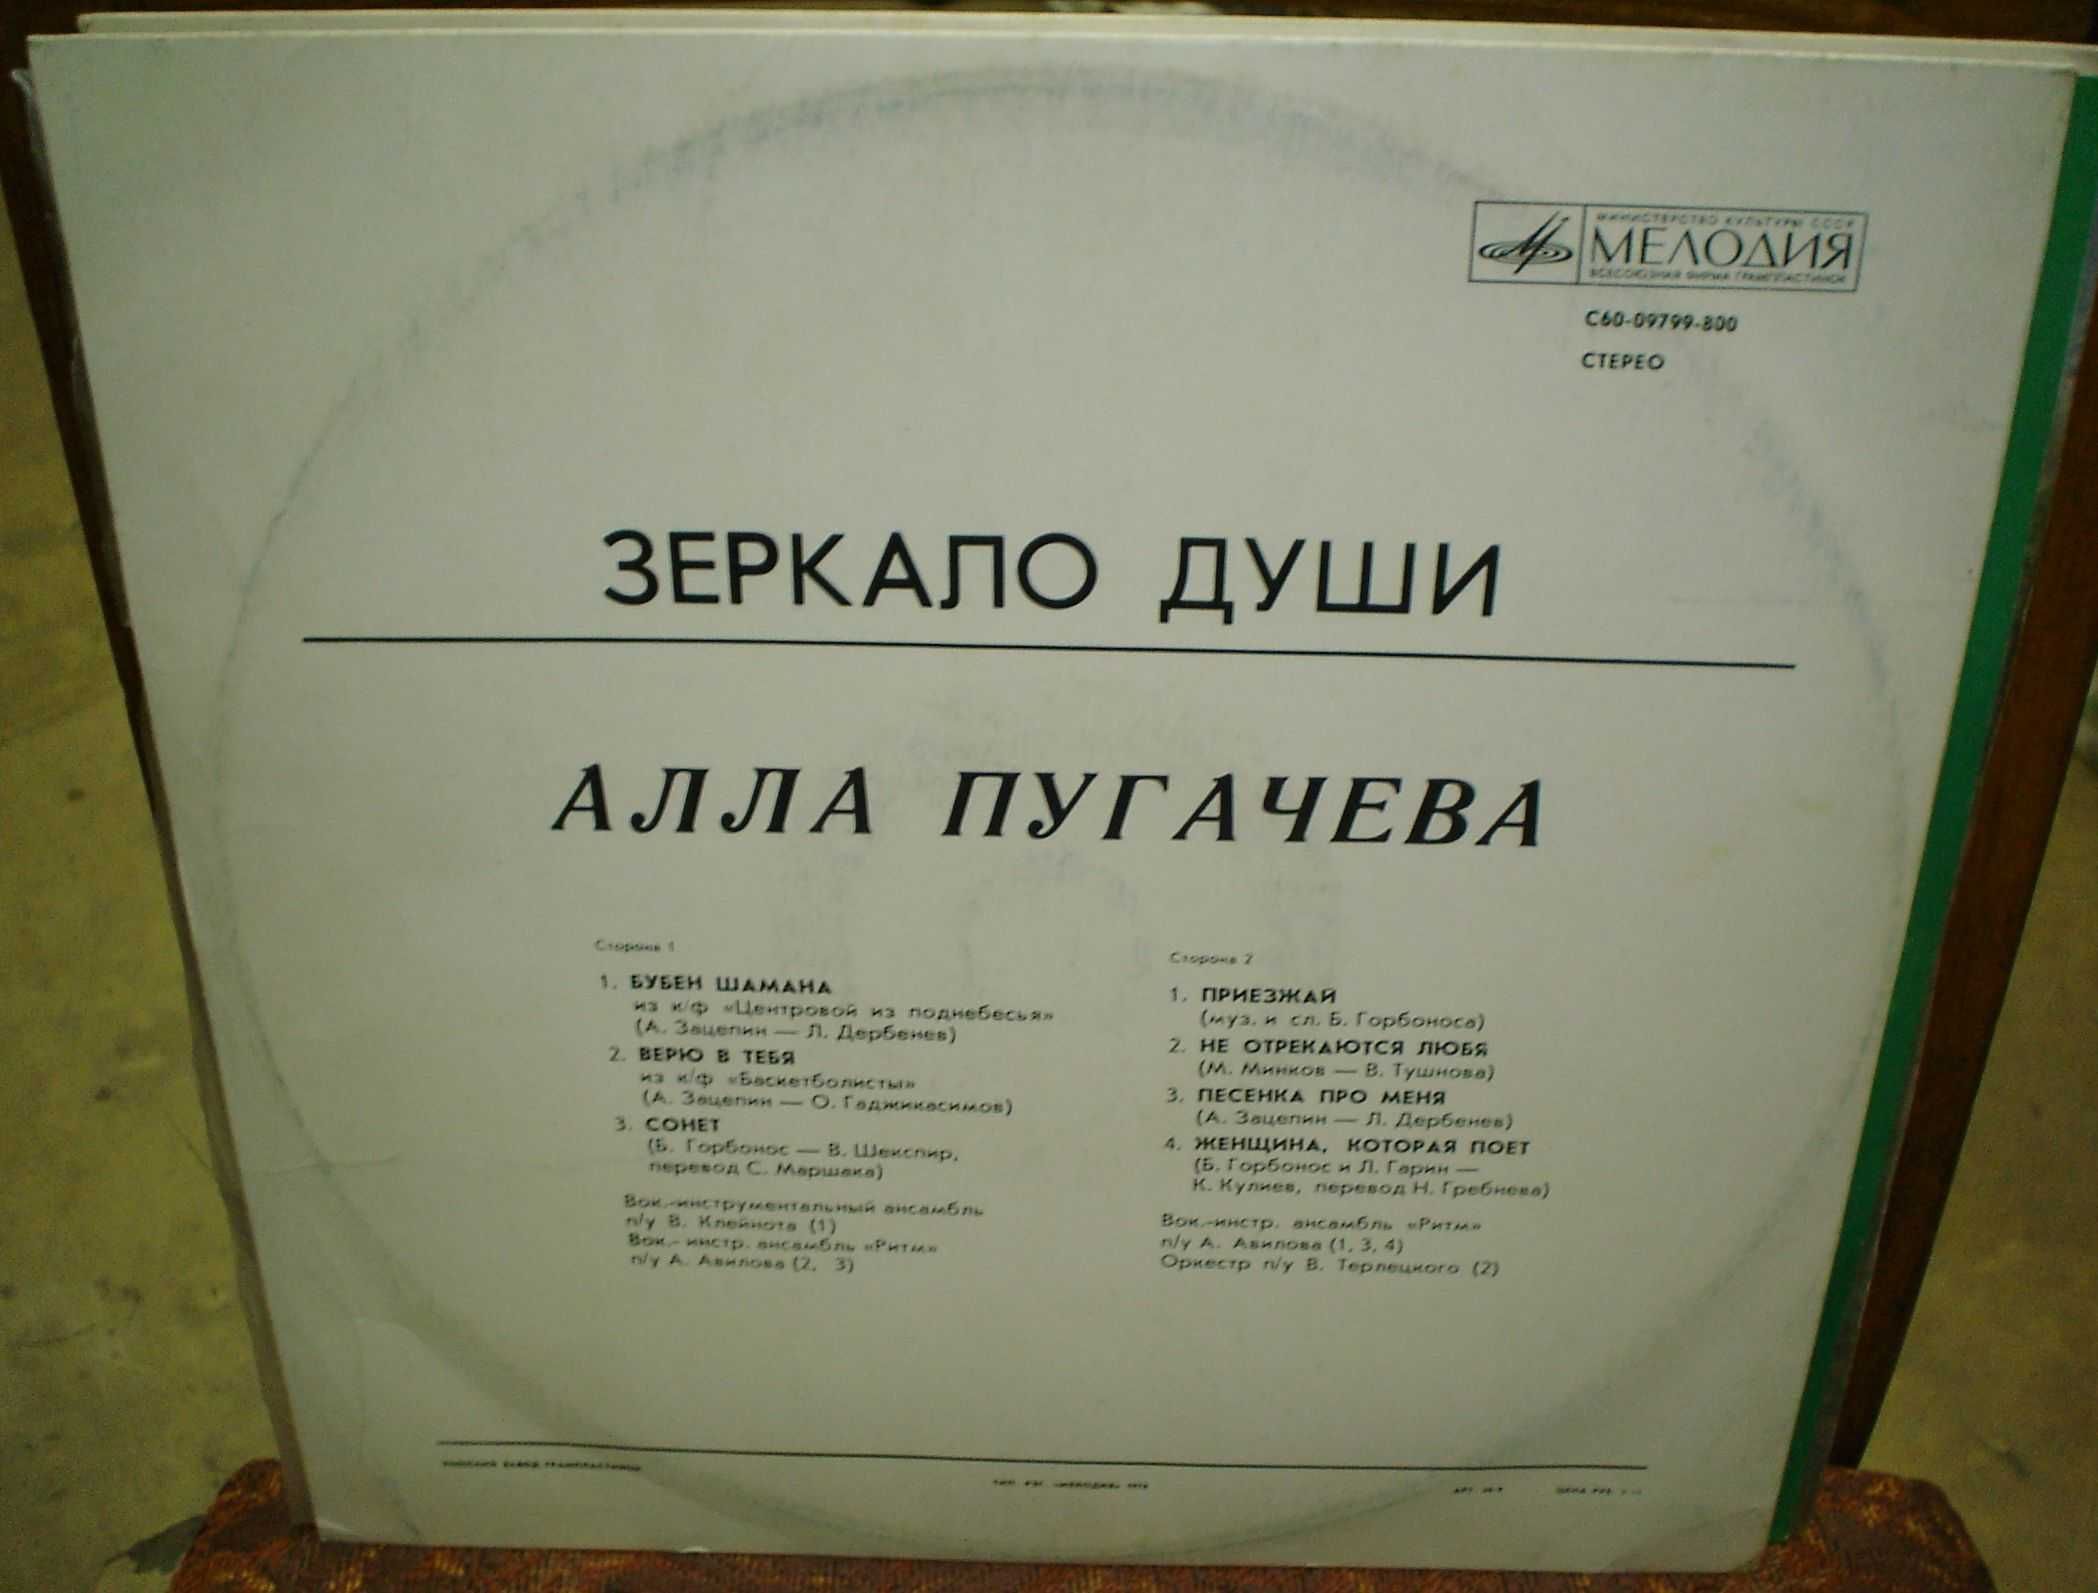 Алла Пугачева - 2 пластинки, цена за 1.